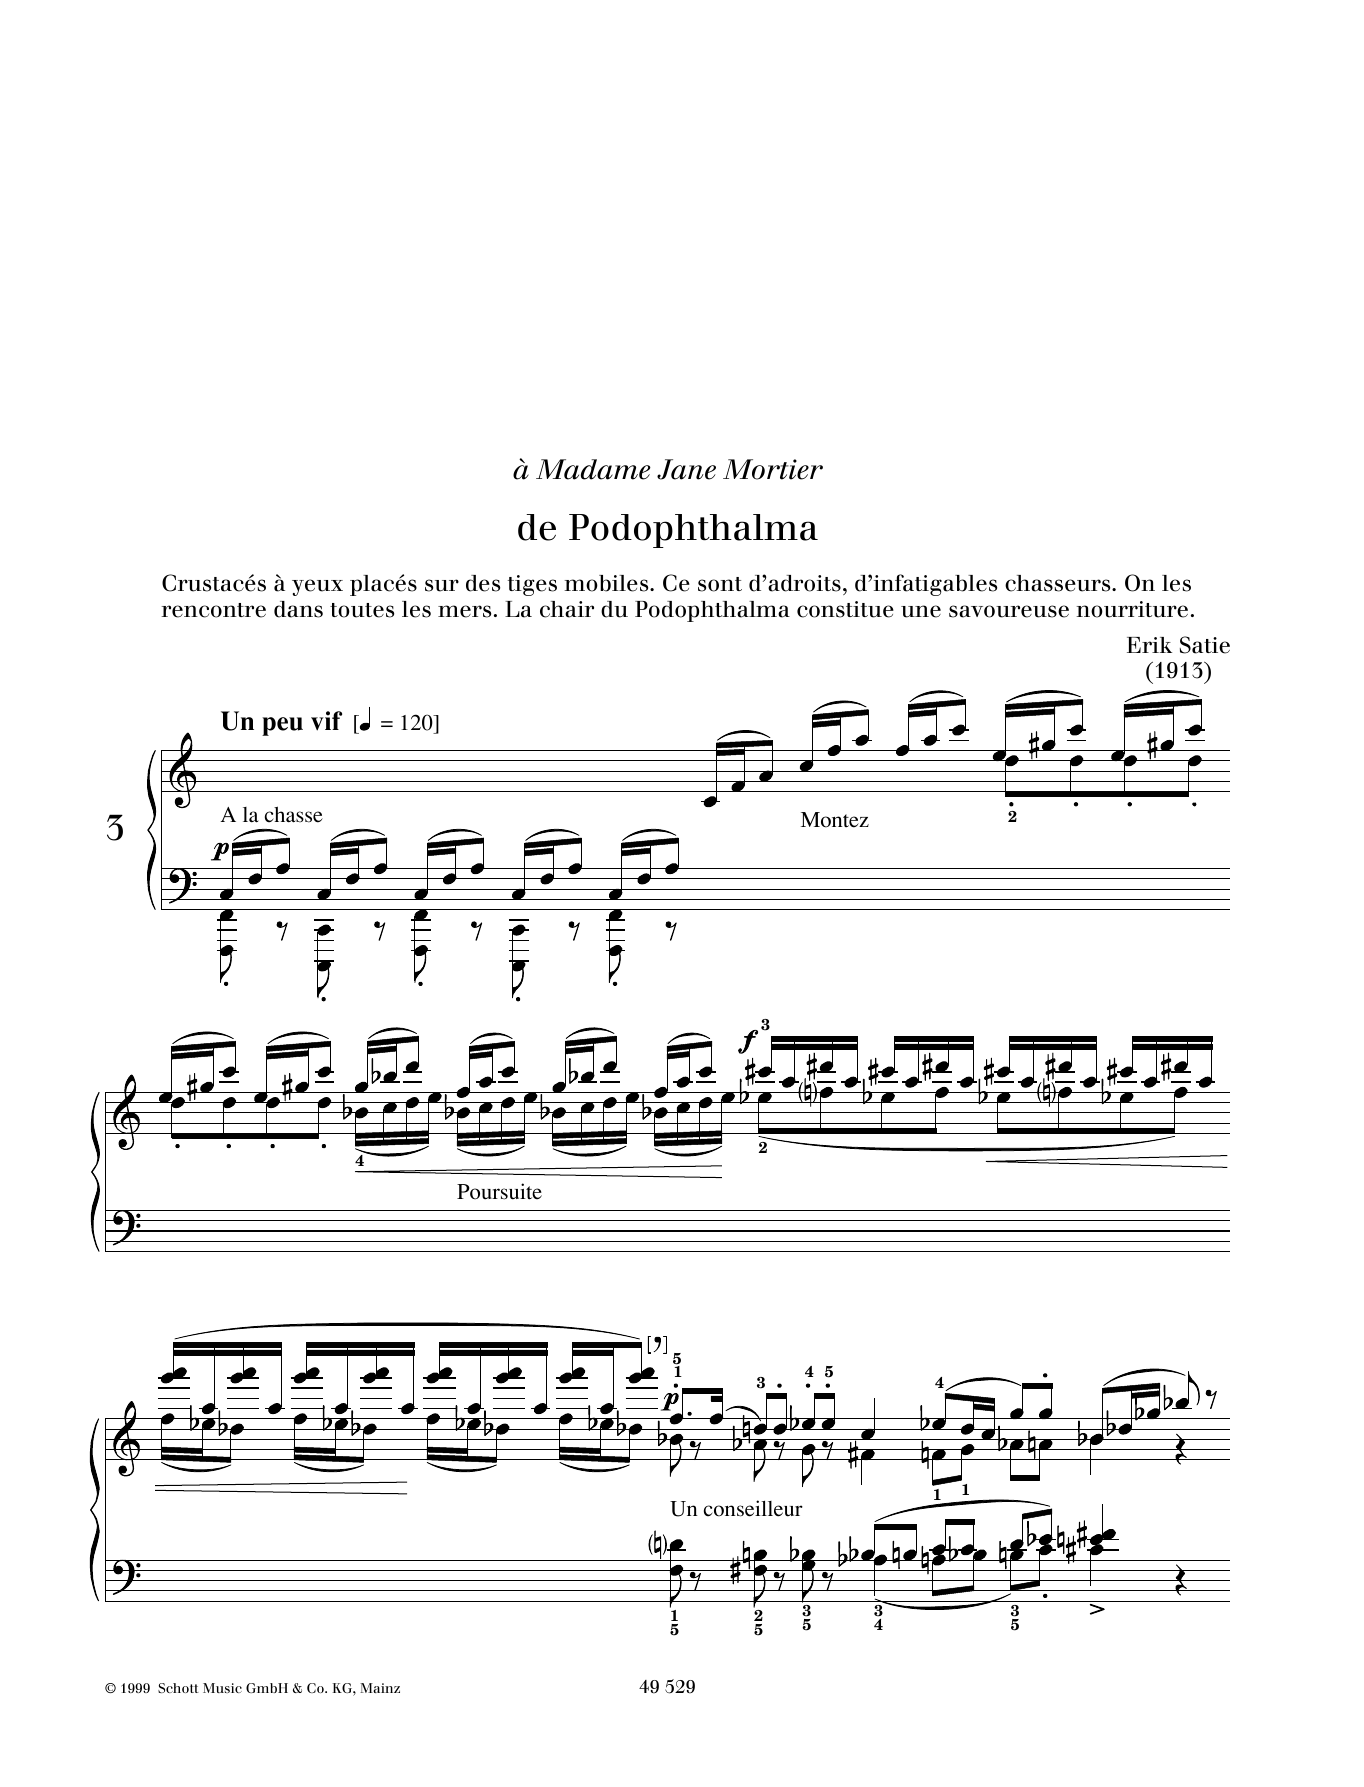 Erik Satie de Podophthalma Sheet Music Notes & Chords for Piano Solo - Download or Print PDF